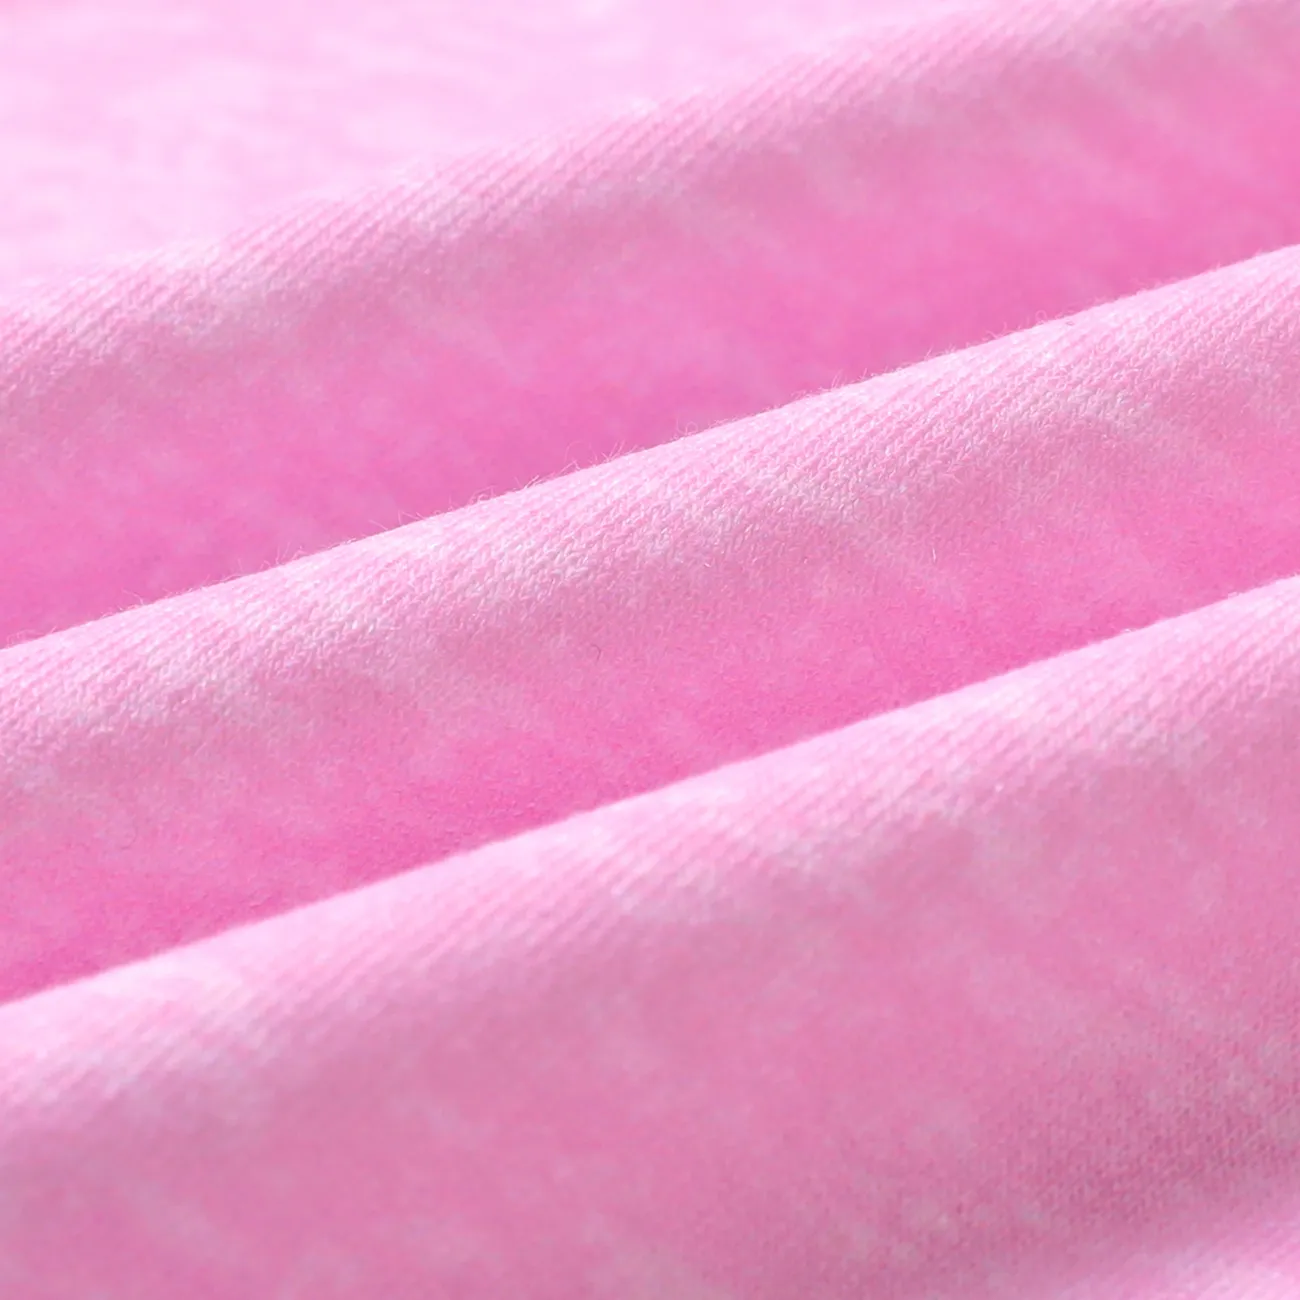 Barbie Toddler Girl Character Print Ruffled Long-sleeve Tee Pink big image 1